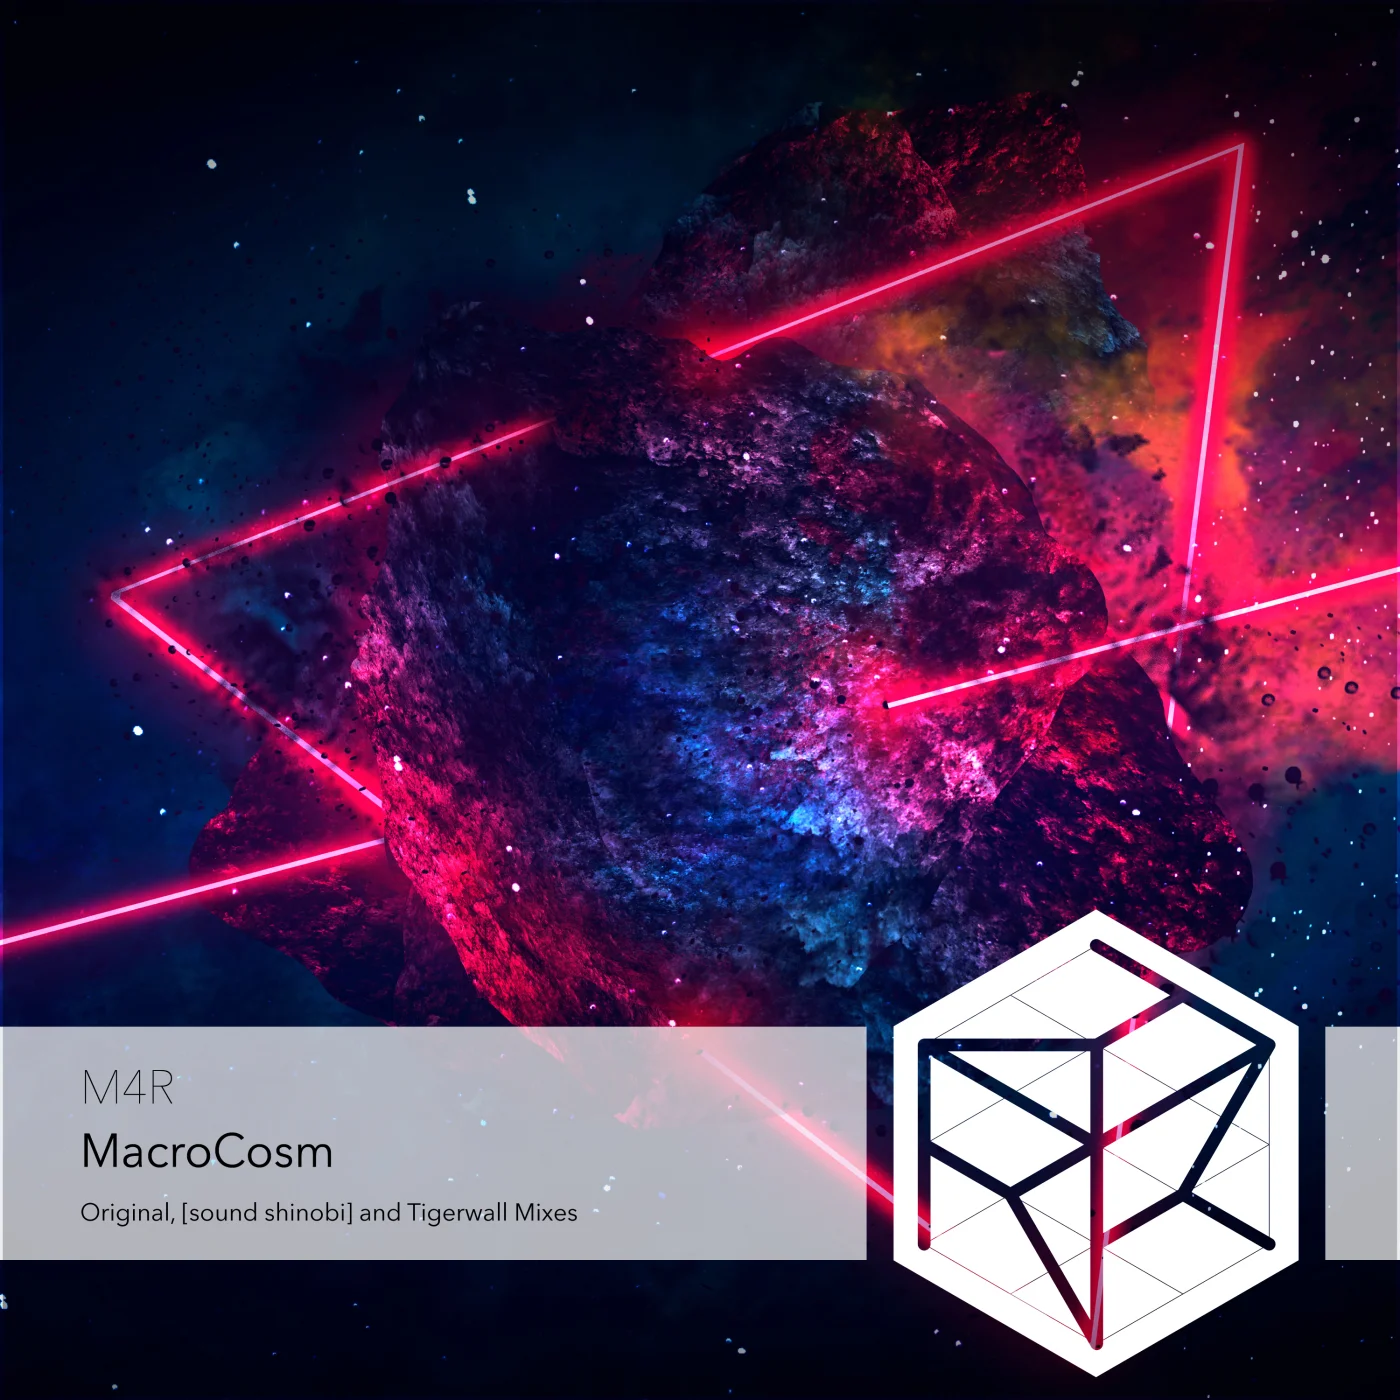 M4R - MacroCosm ([sound shinobi] Extended Remix)